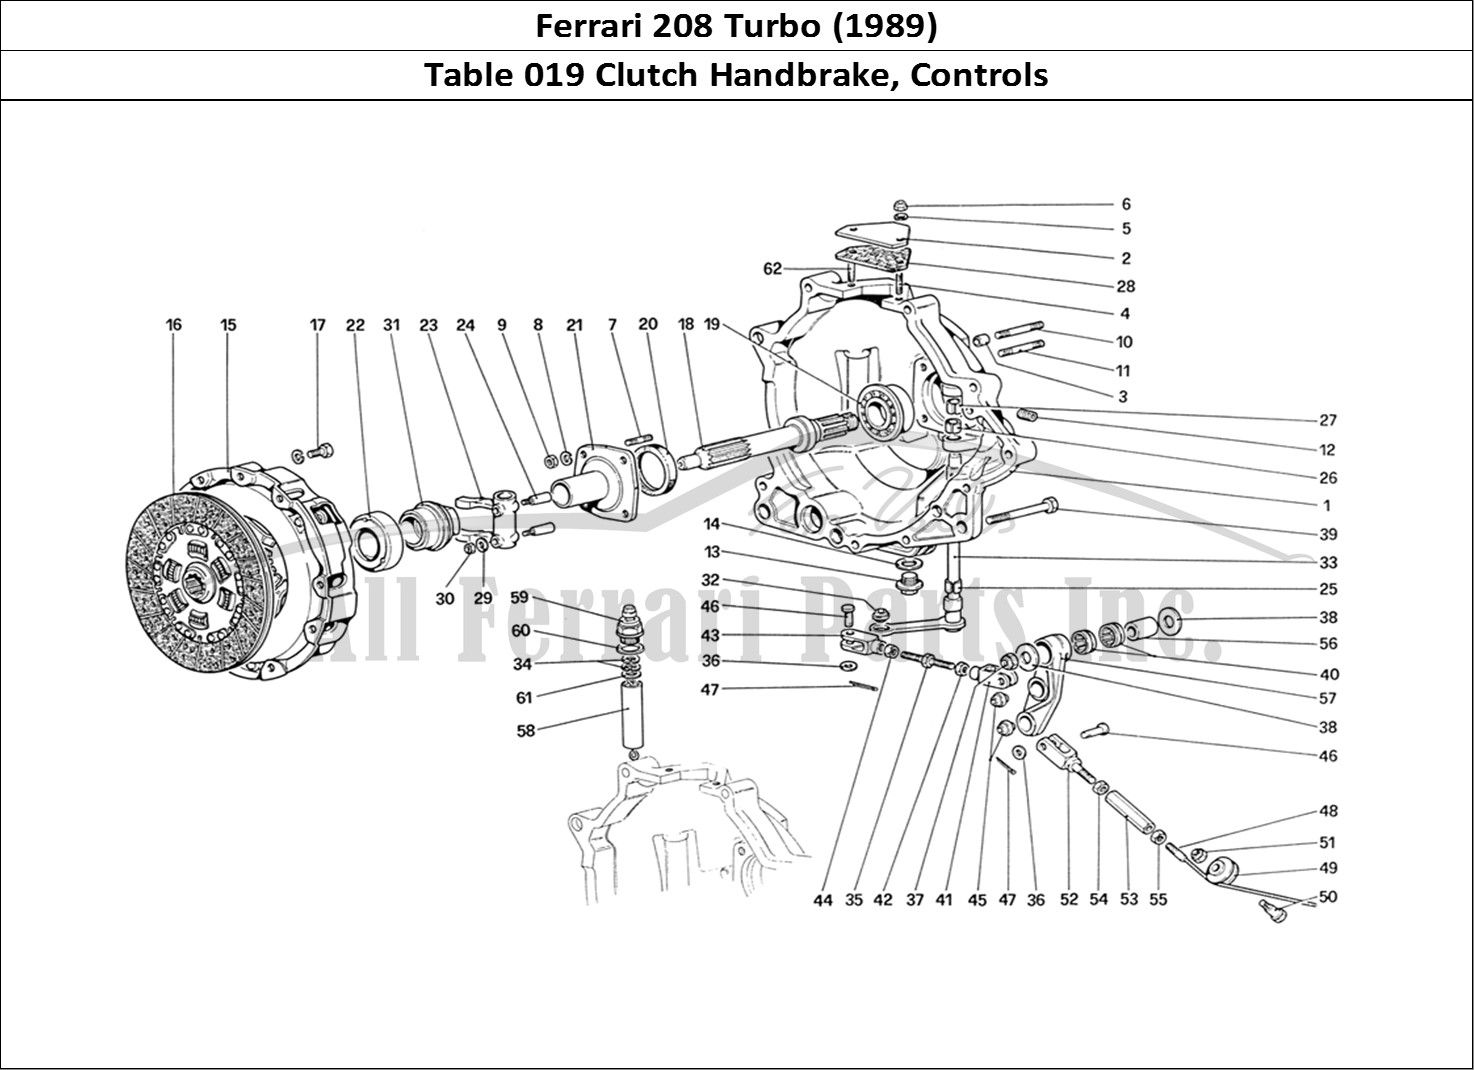 Ferrari Parts Ferrari 208 Turbo (1989) Page 019 Clutch and Controls